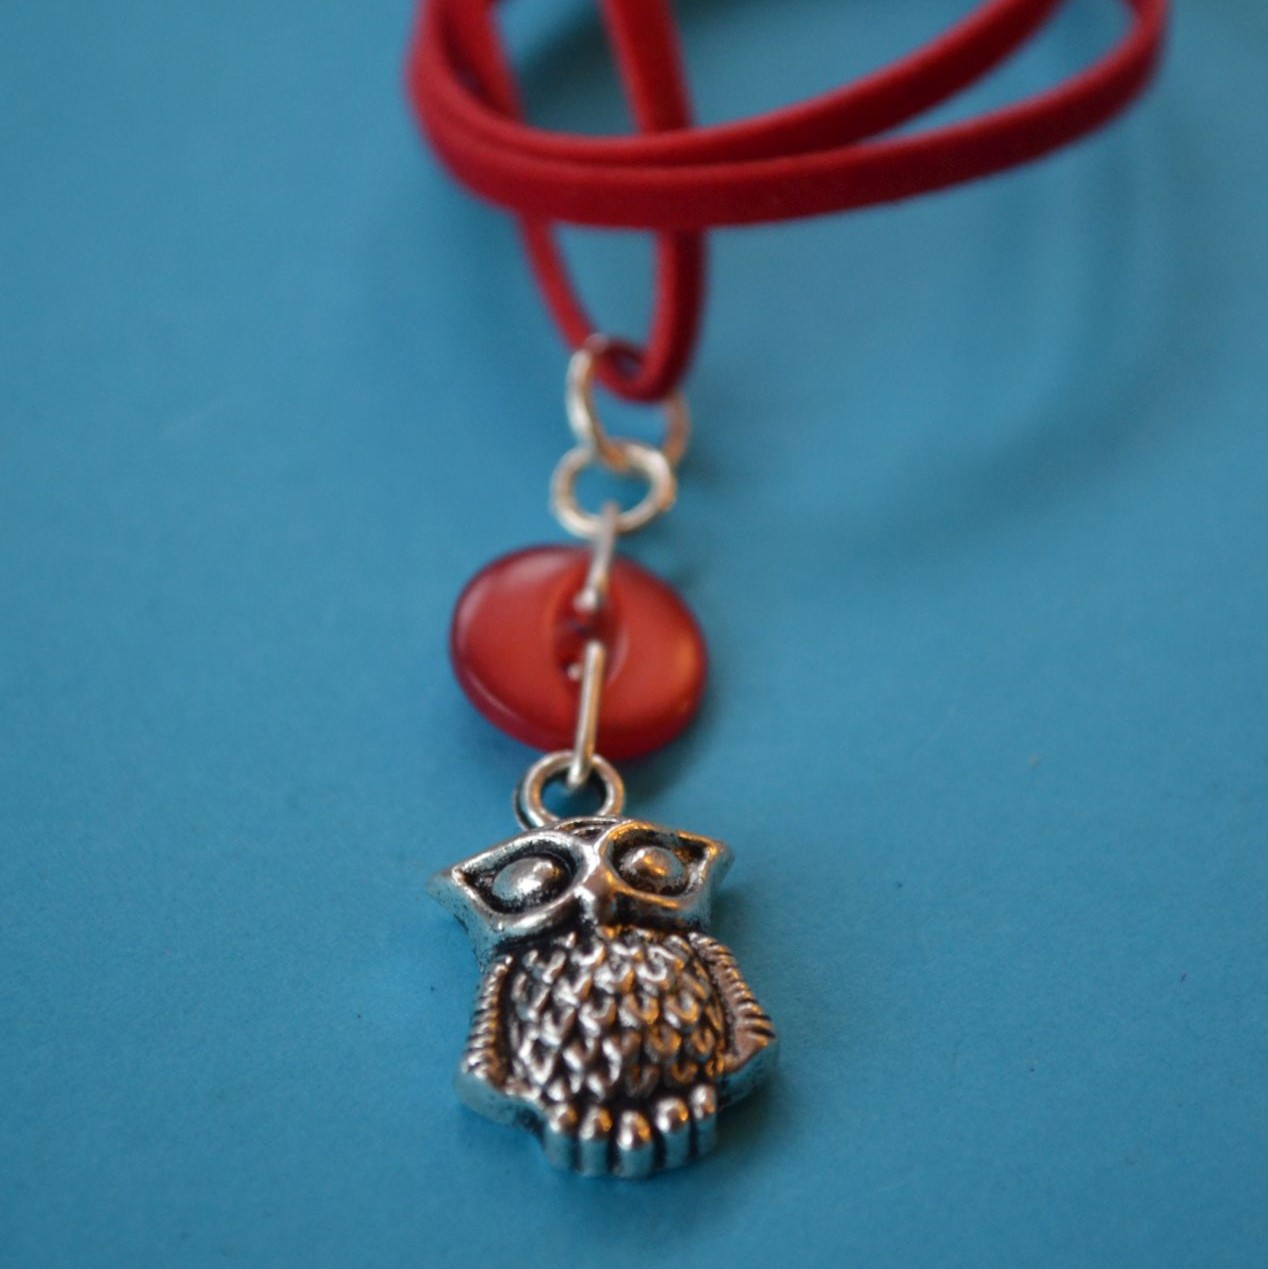 Owl Child’s Button Charm Necklace